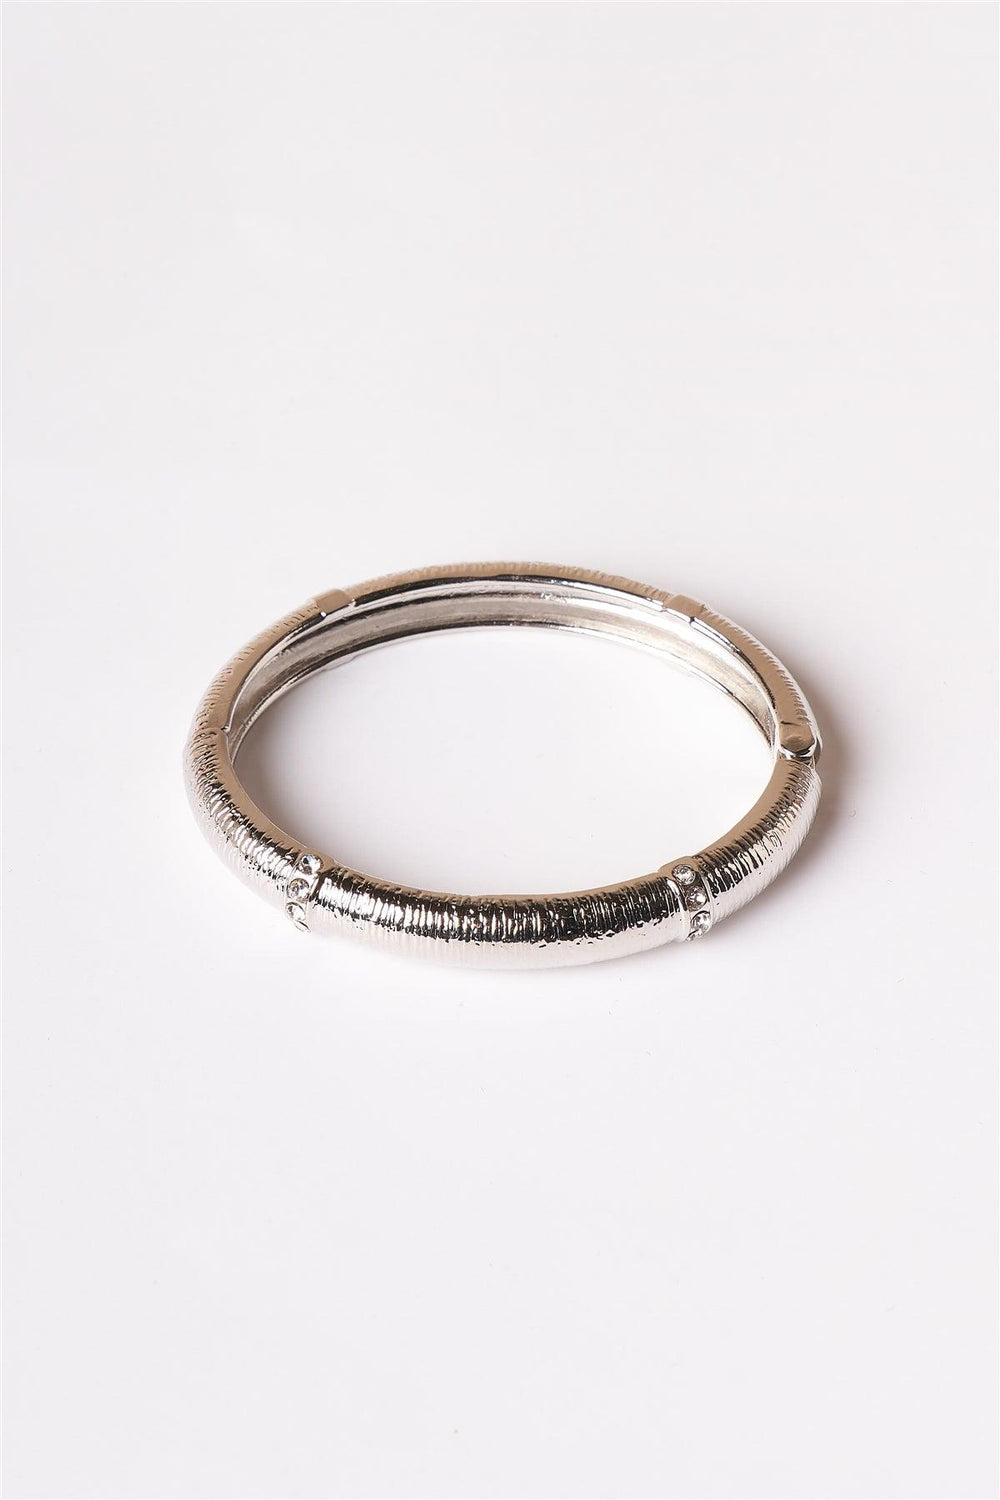 Silver Textured Metal Bangle Bracelet /1 Piece